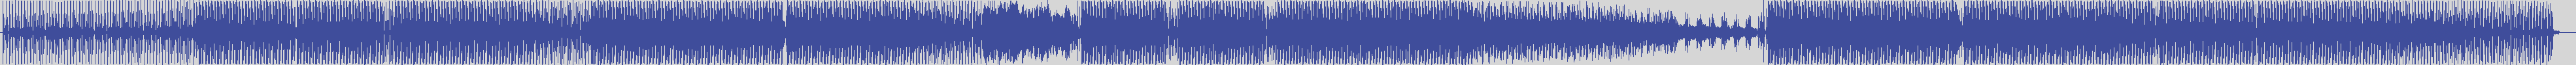 space_round [SRR003] Manuel Rotondo - Boarding Pass [Marco Hawk Remix] audio wave form